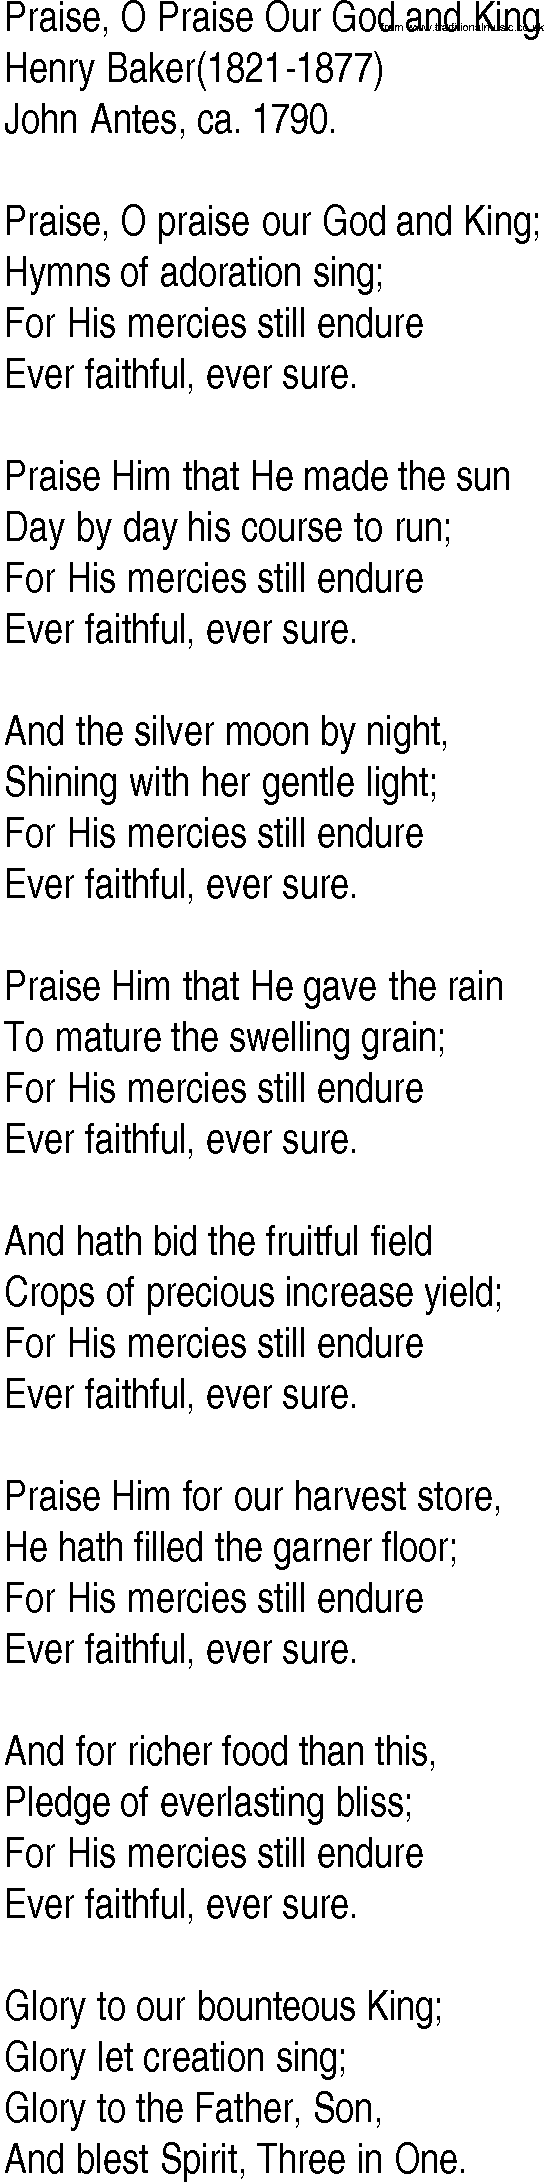 Hymn and Gospel Song: Praise, O Praise Our God and King by Henry Baker lyrics